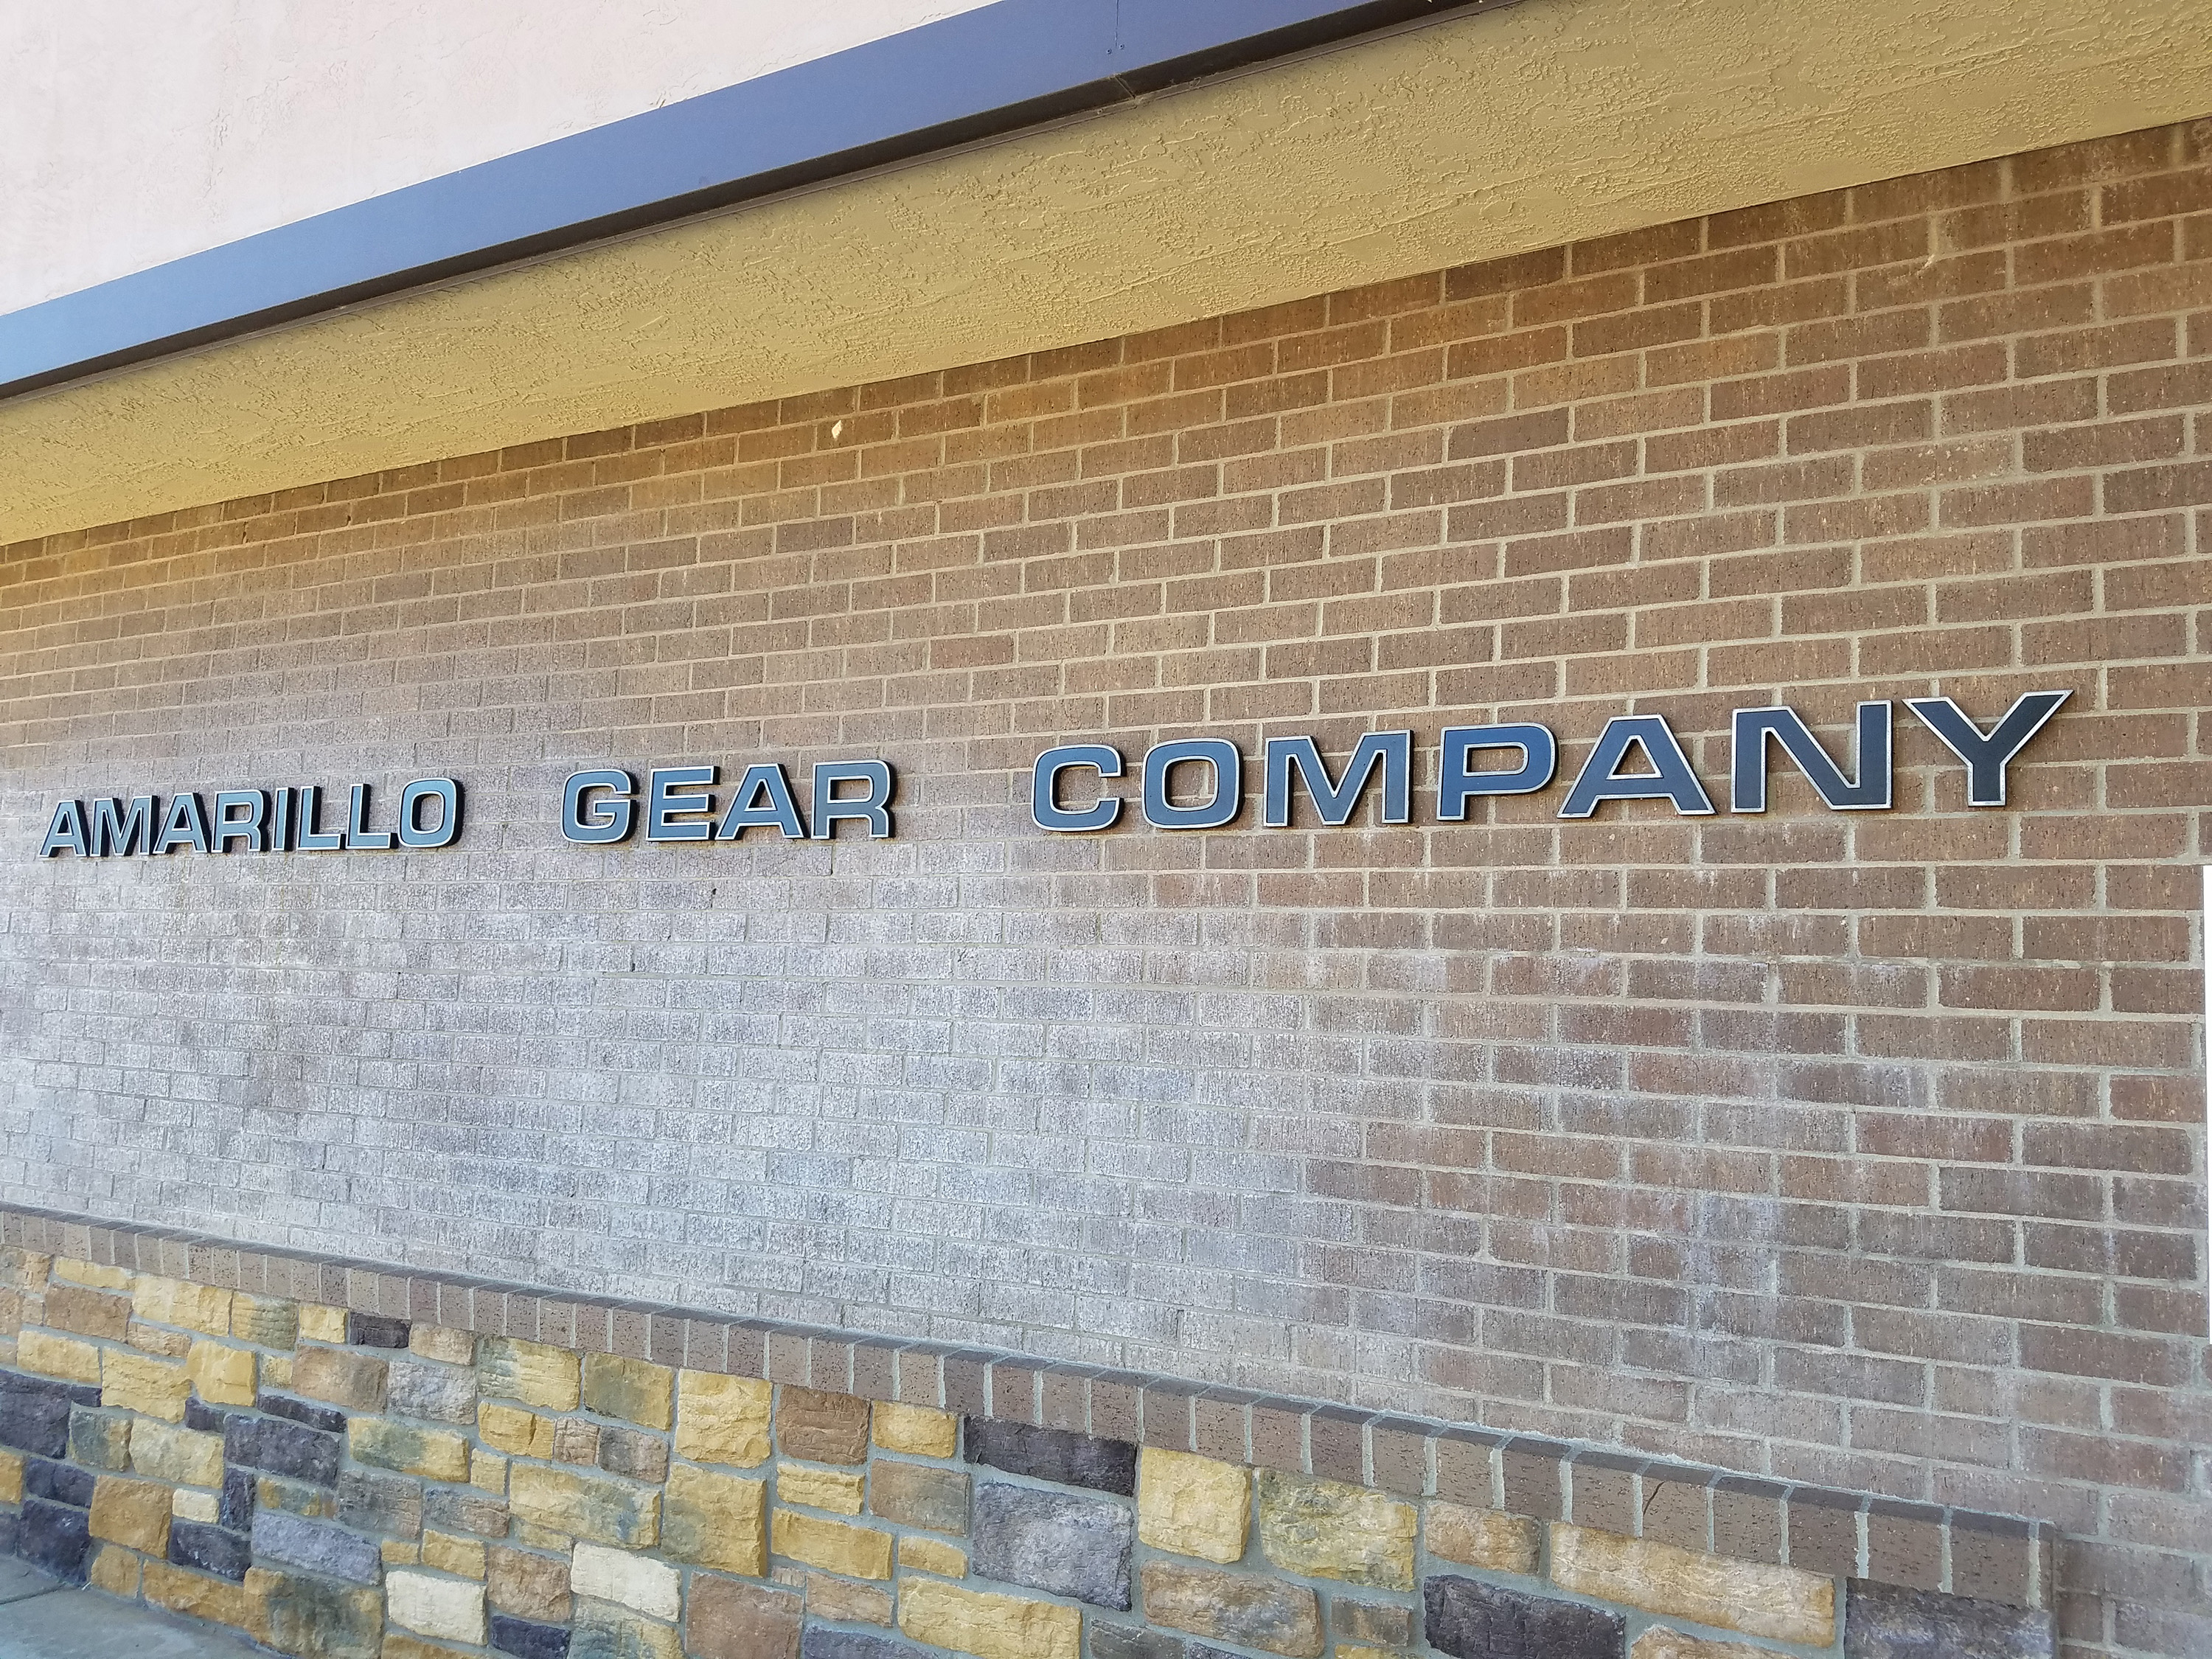 Amarillo gear company building, Amarillo, Texas